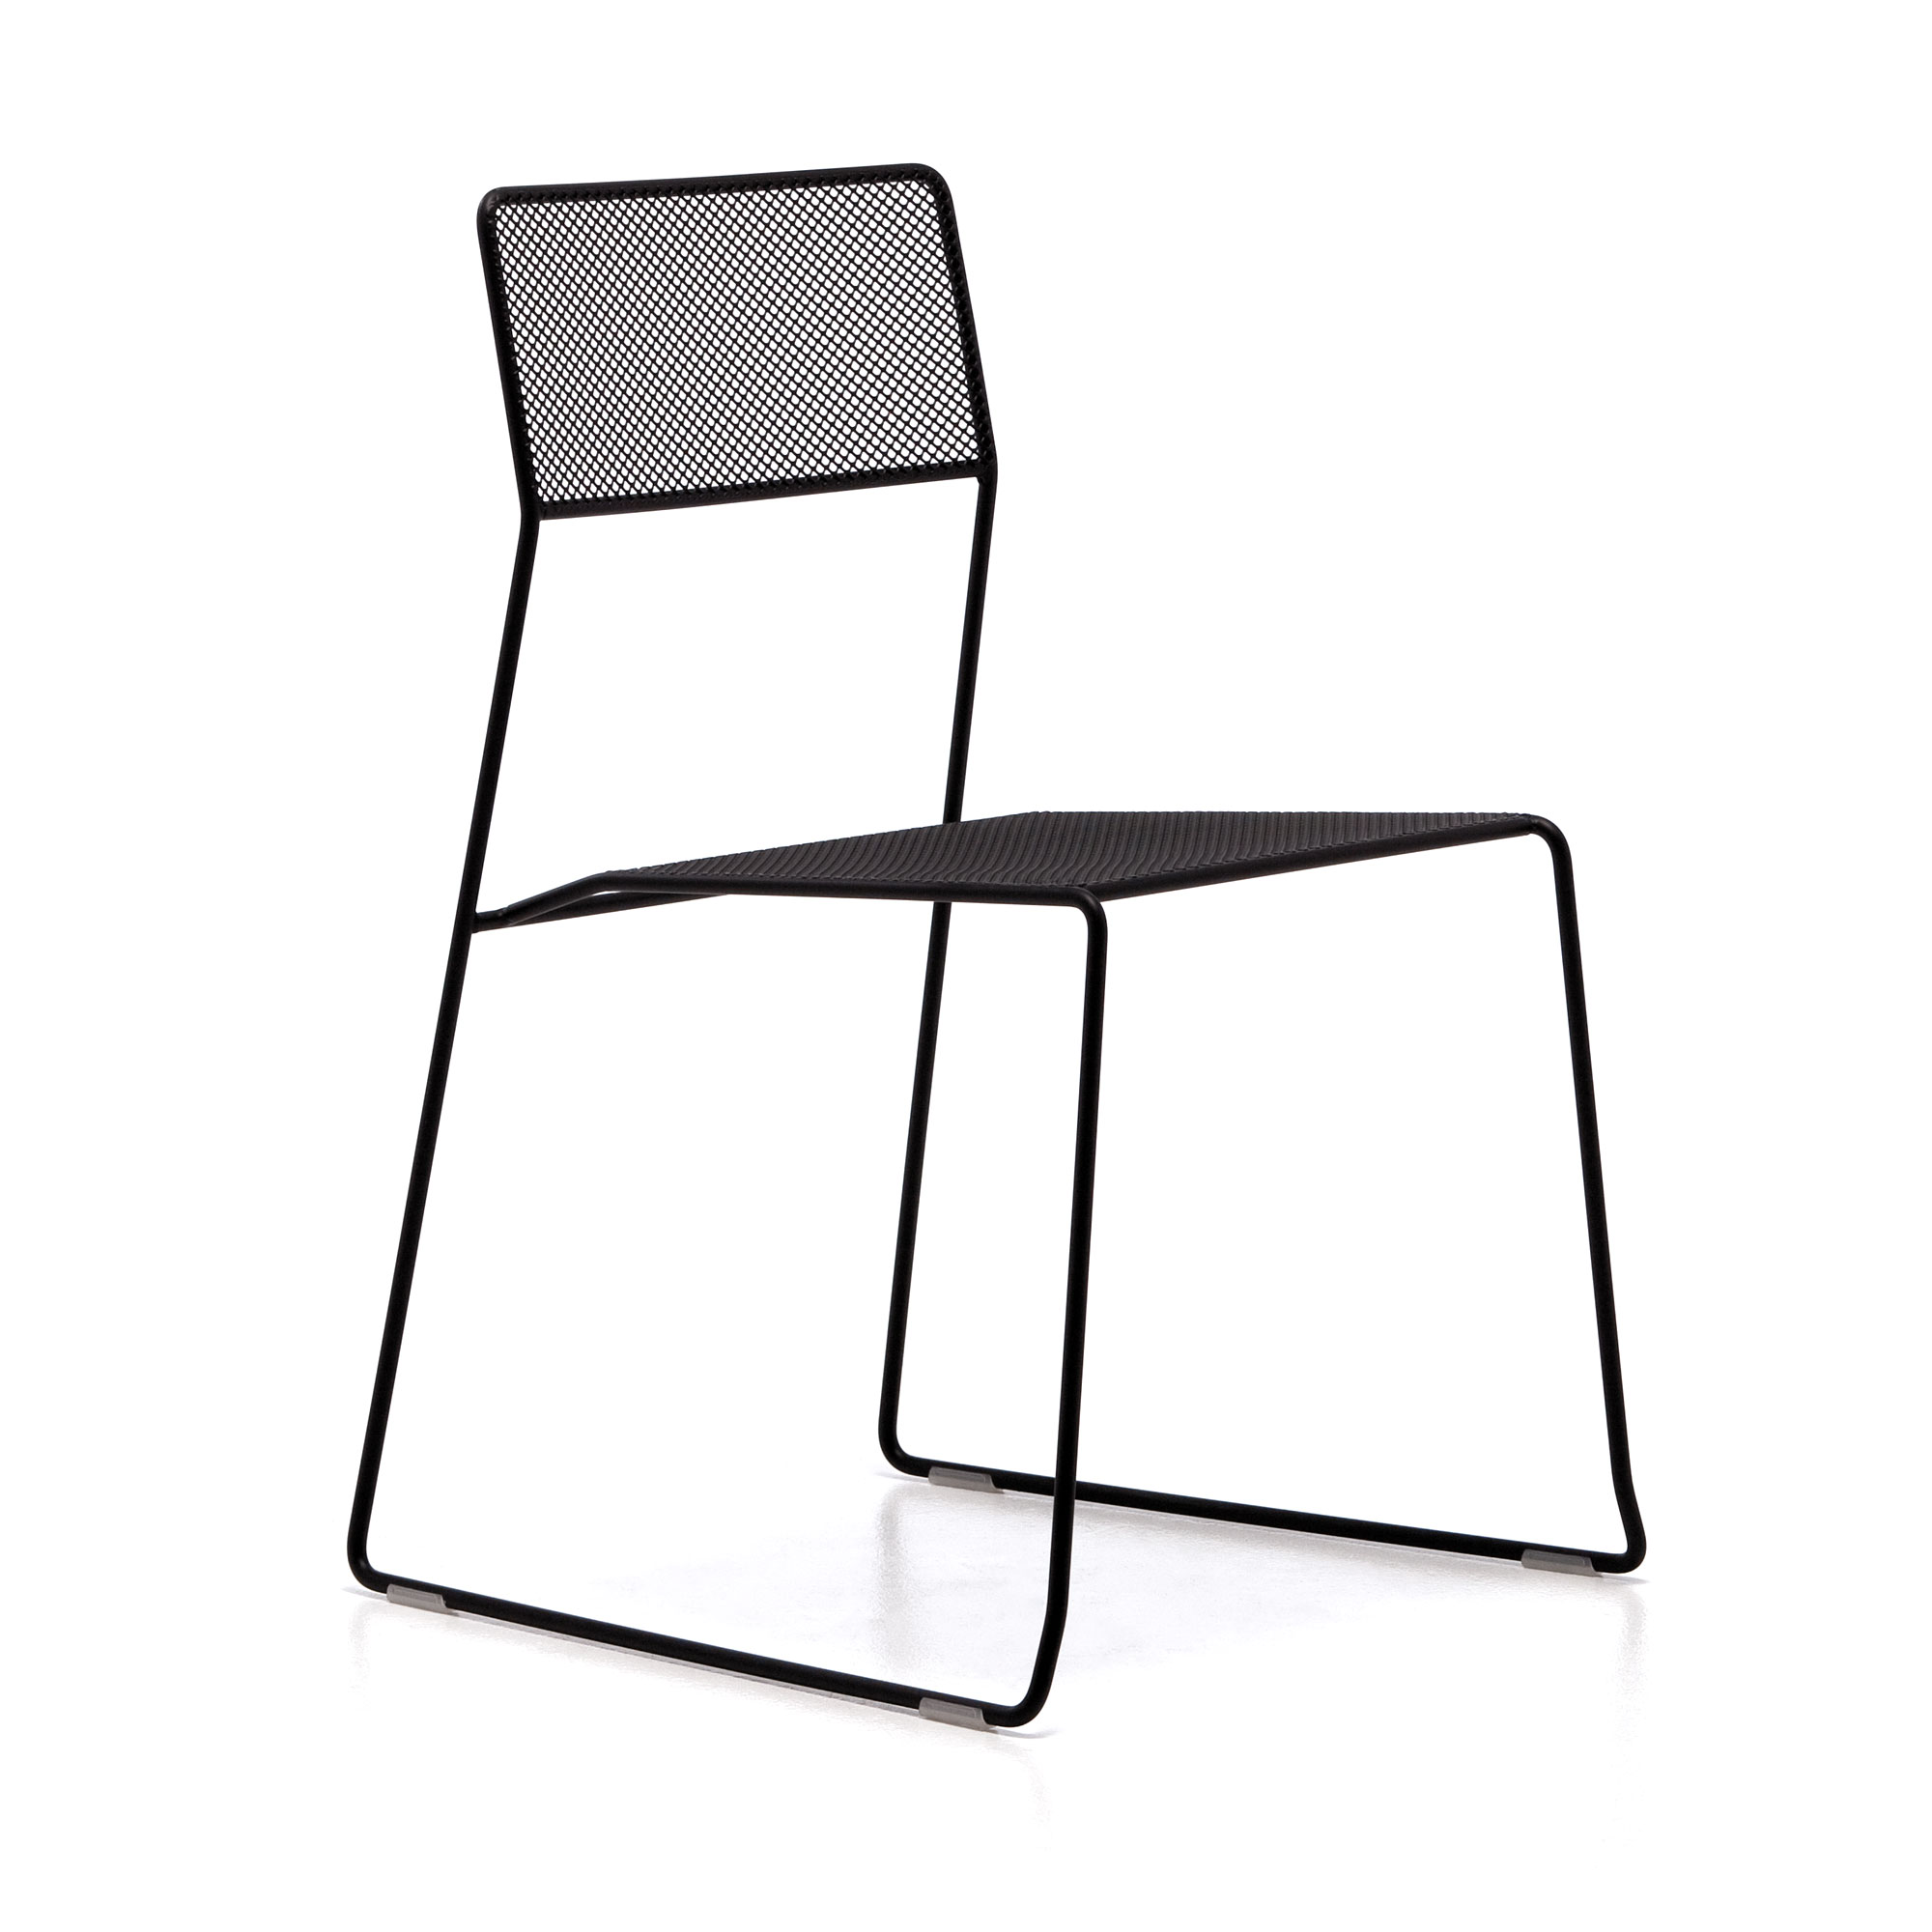 LOG MESH καρέκλα - συσκευασία 4 τεμαχίων